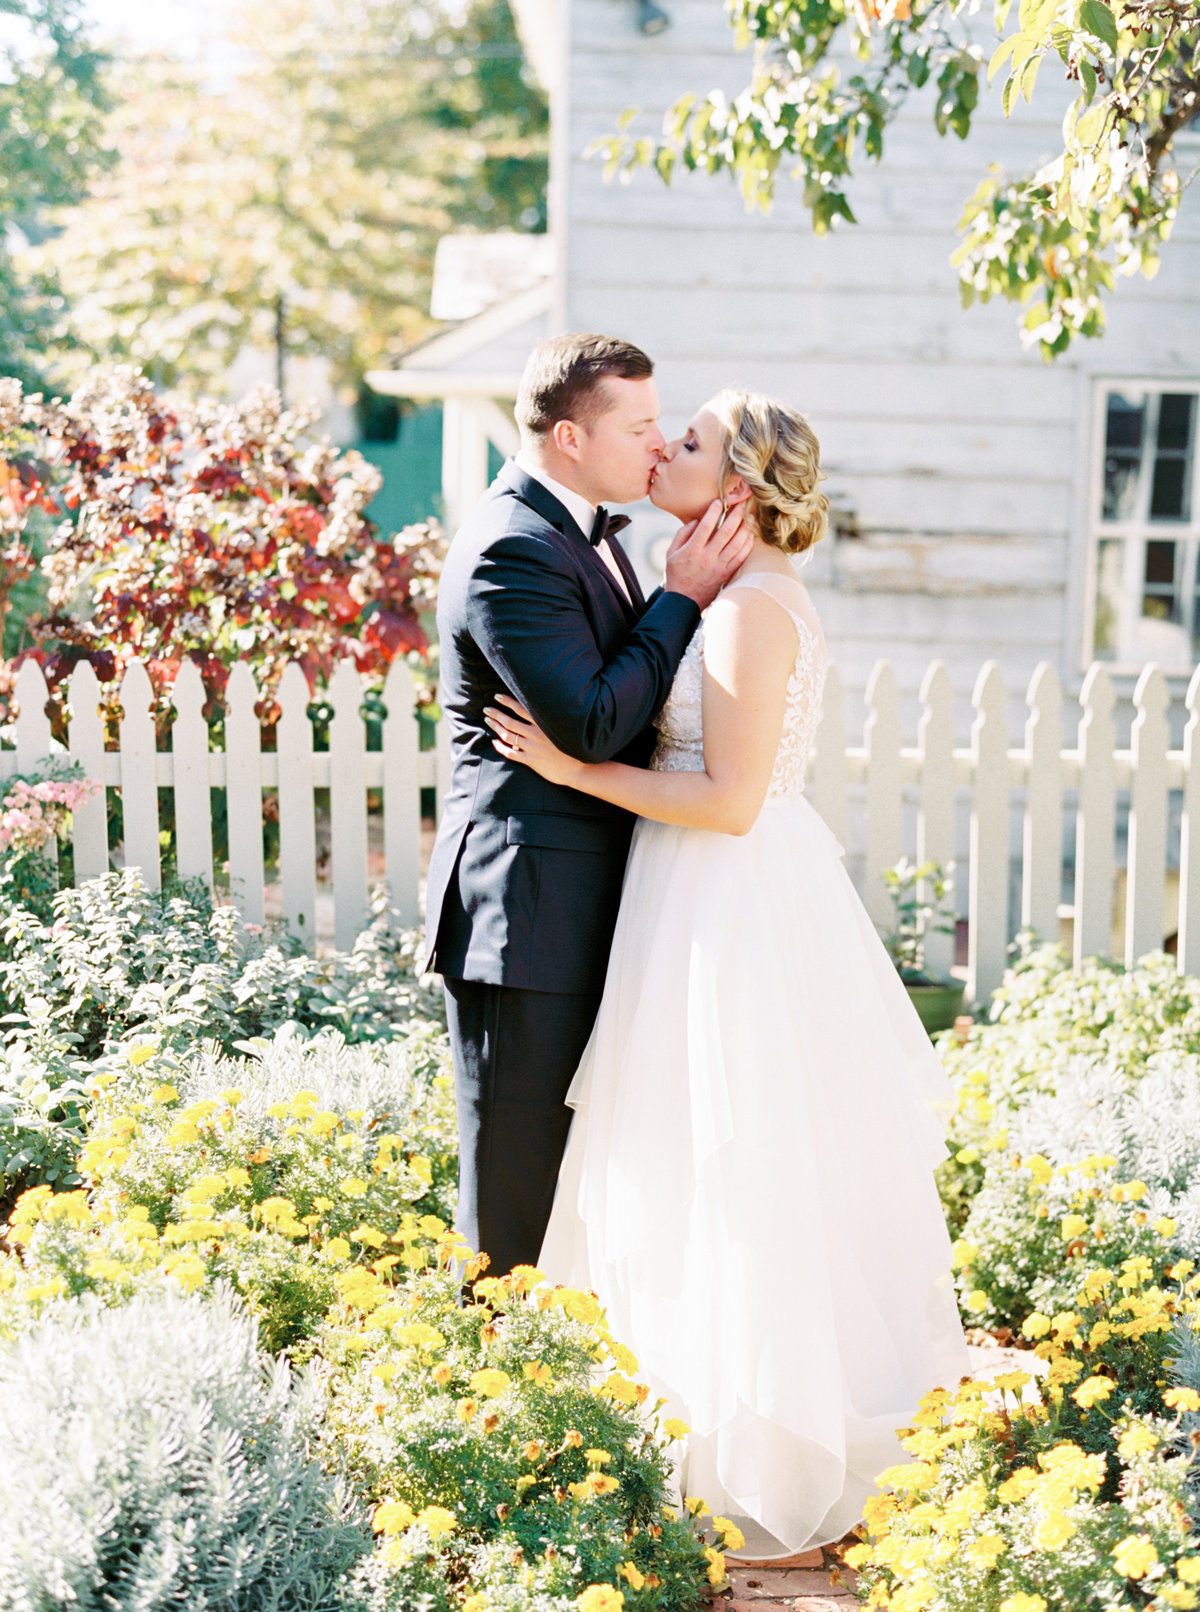 Easton_Maryland-fall-backyard-wedding-photographer-Richmond-natalie-jayne-photography-image-15